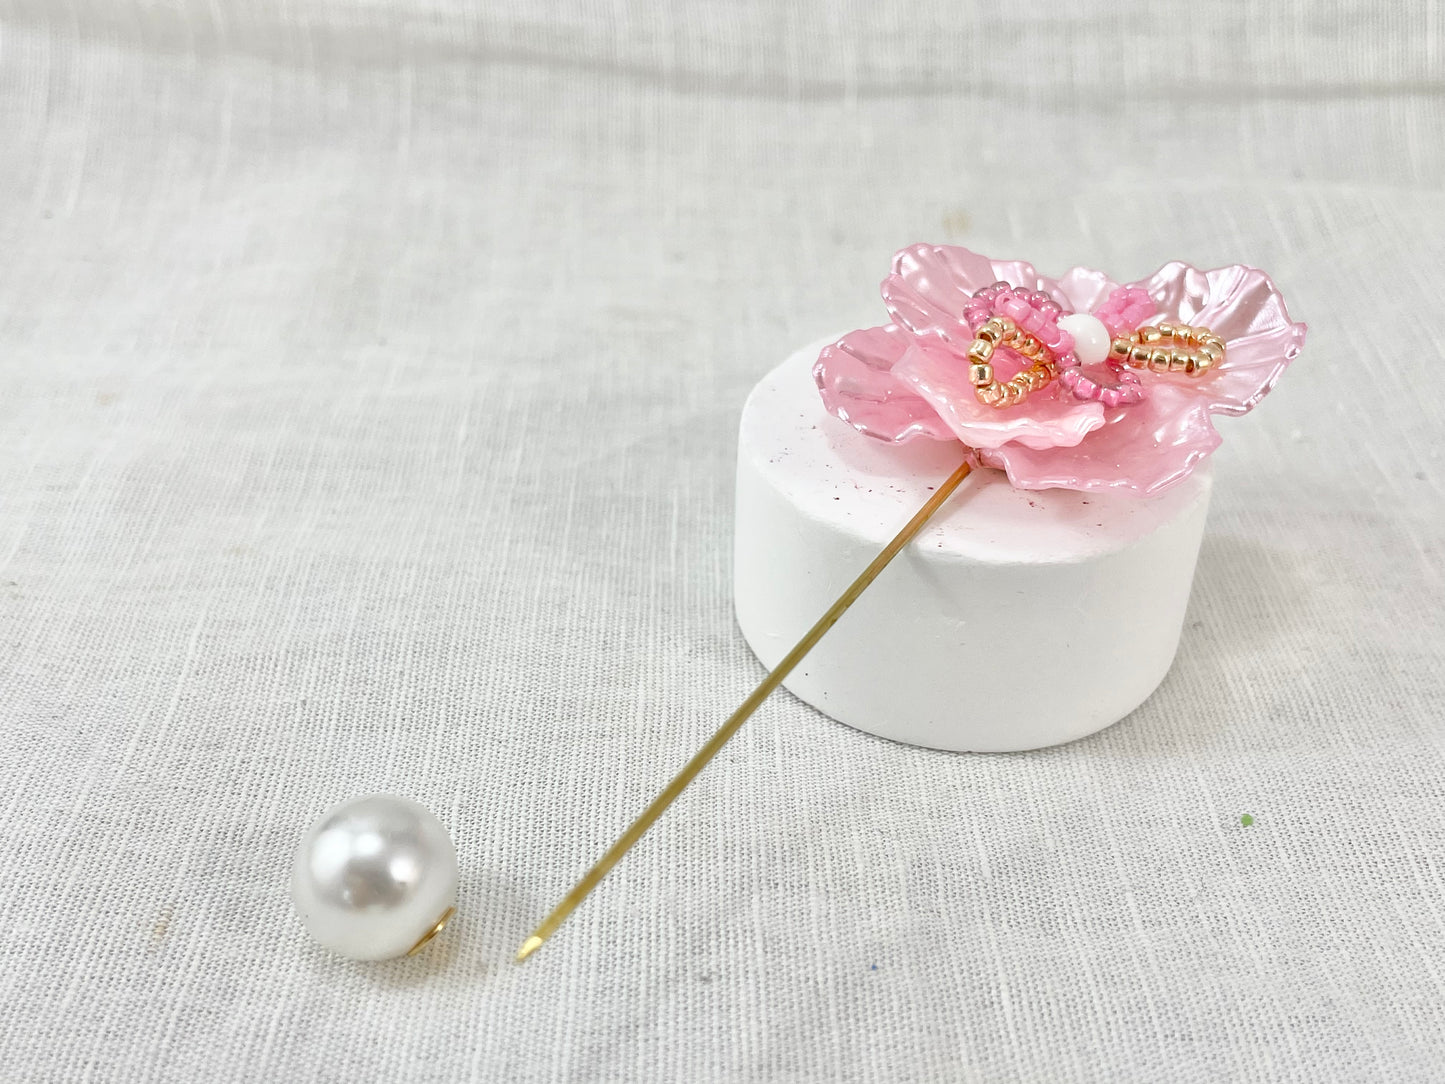 Pin brooch - flower - pink